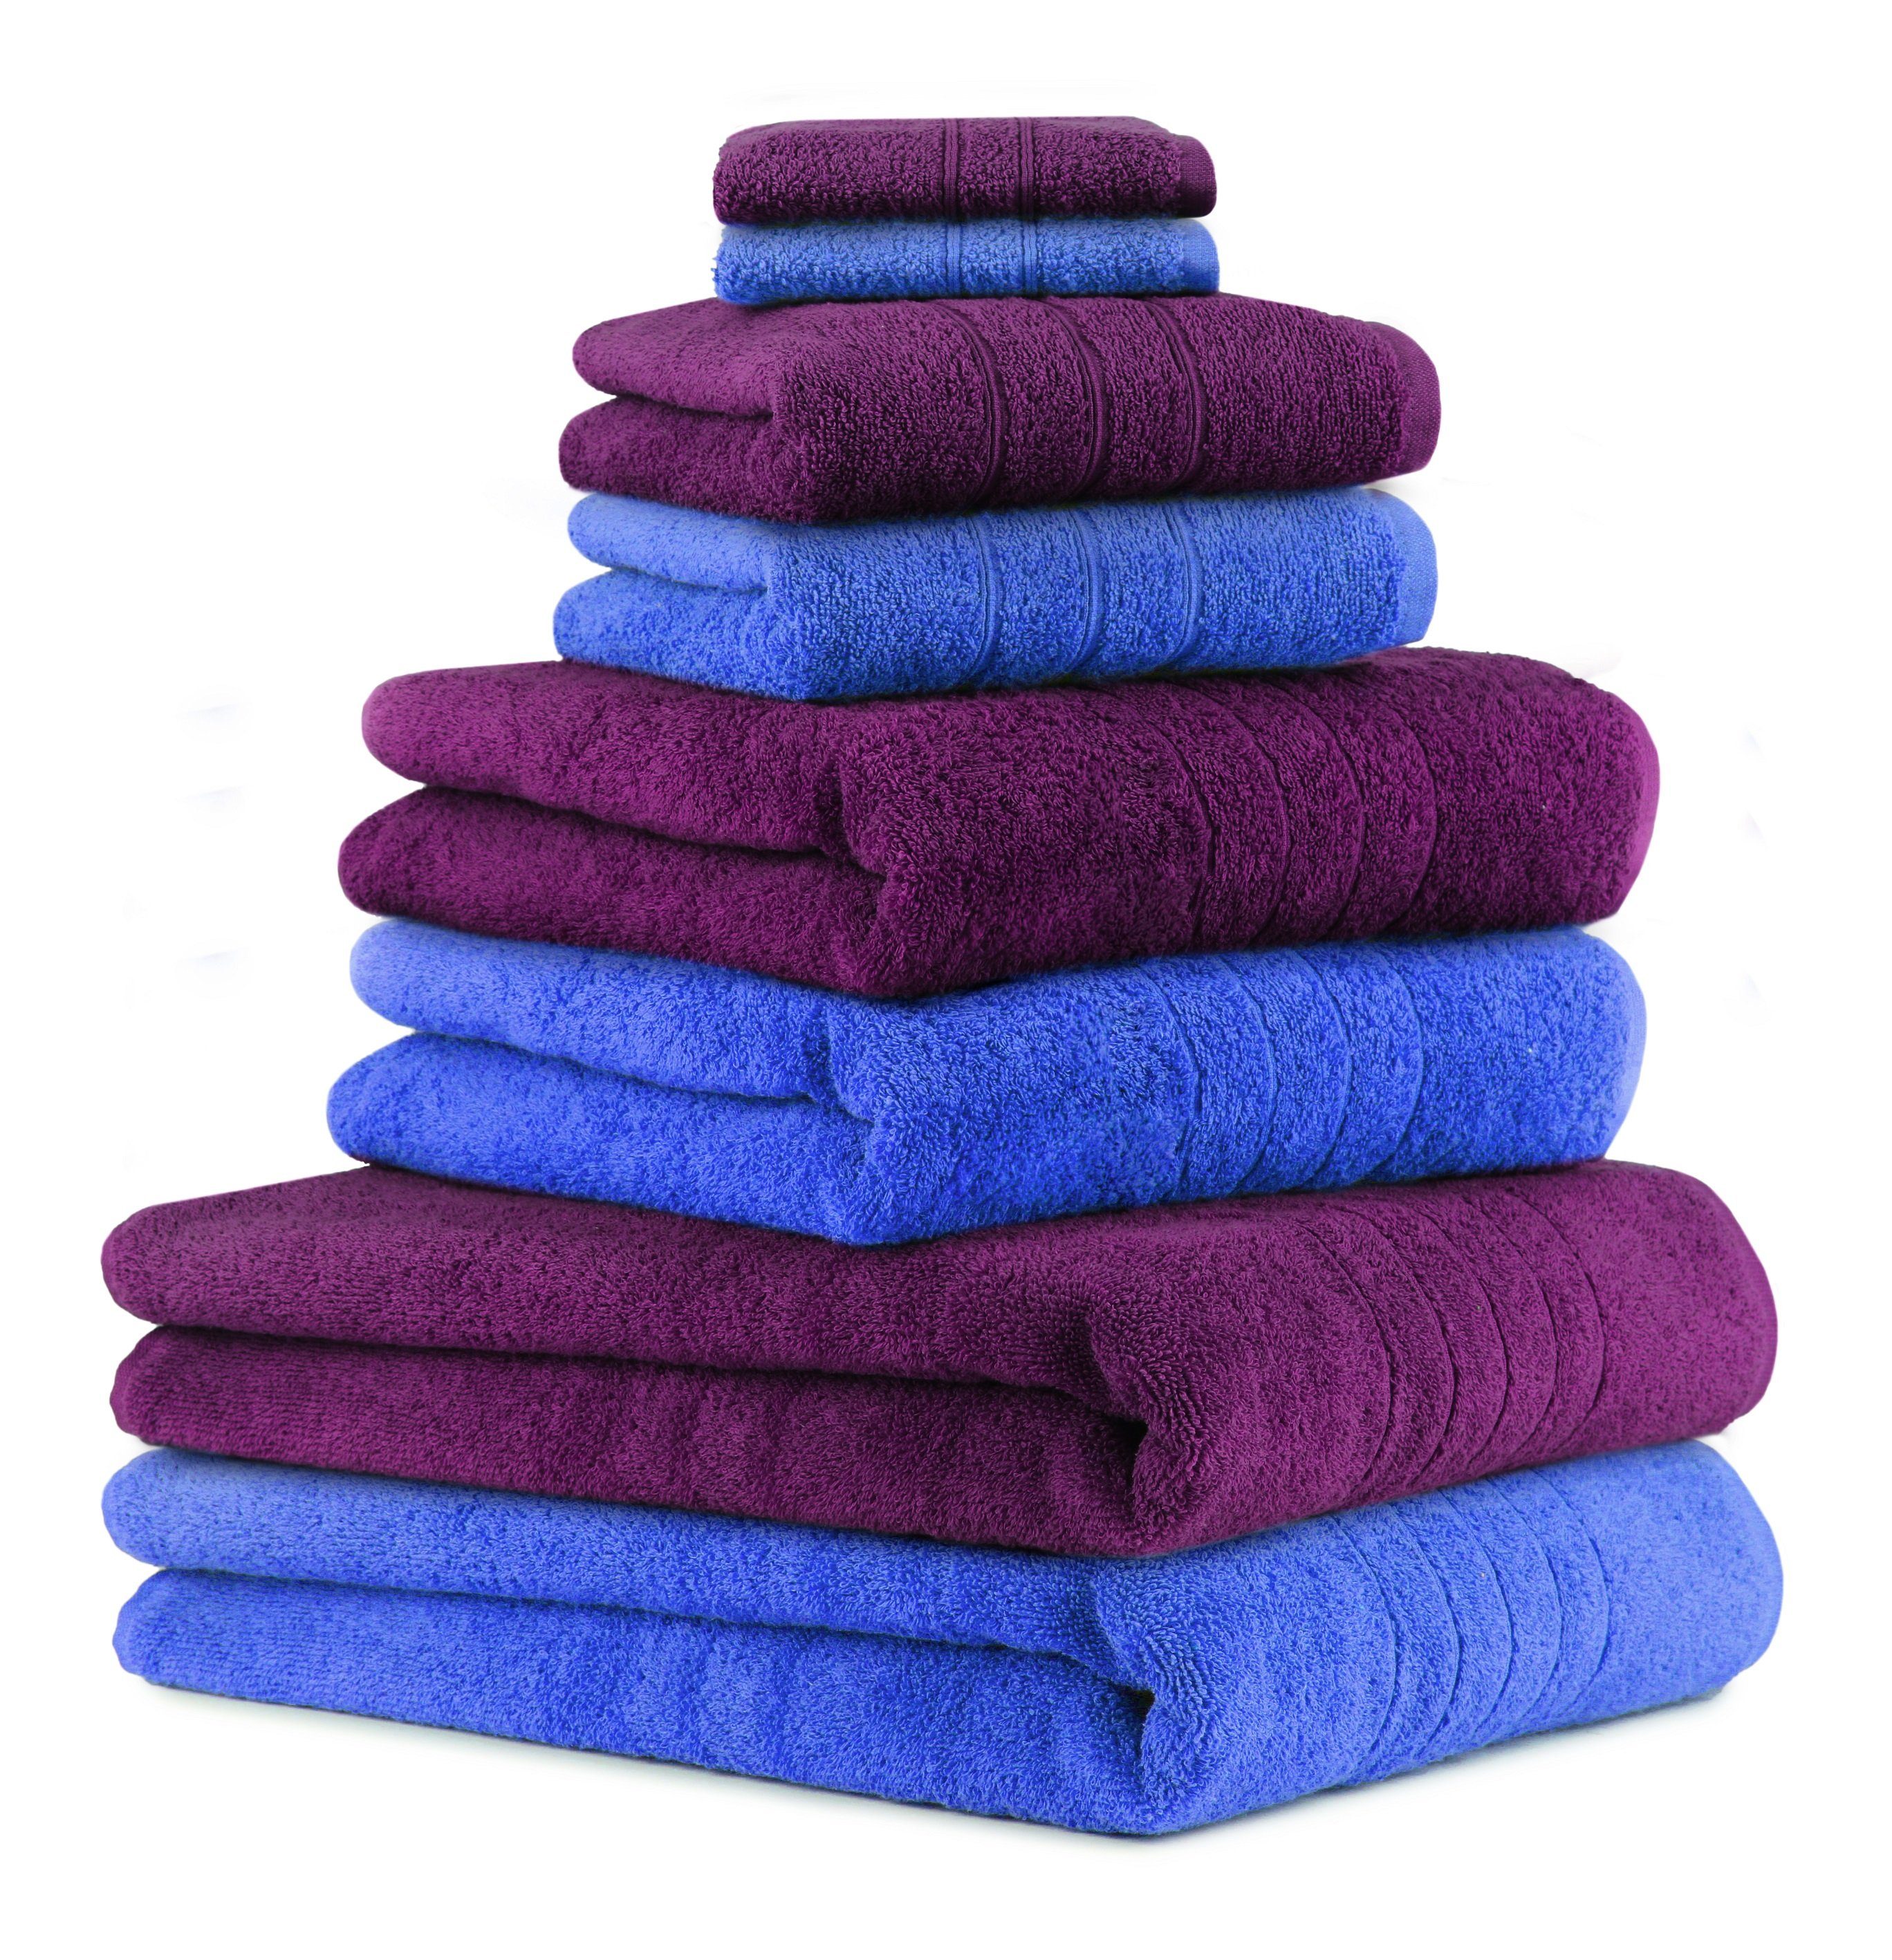 Betz Handtuch Set 8-TLG. Handtuch-Set Deluxe 100% Baumwolle 2 Badetücher 2 Duschtücher 2 Handtücher 2 Seiftücher Farbe Pflaume und blau, 100% Baumwolle, (8-tlg)